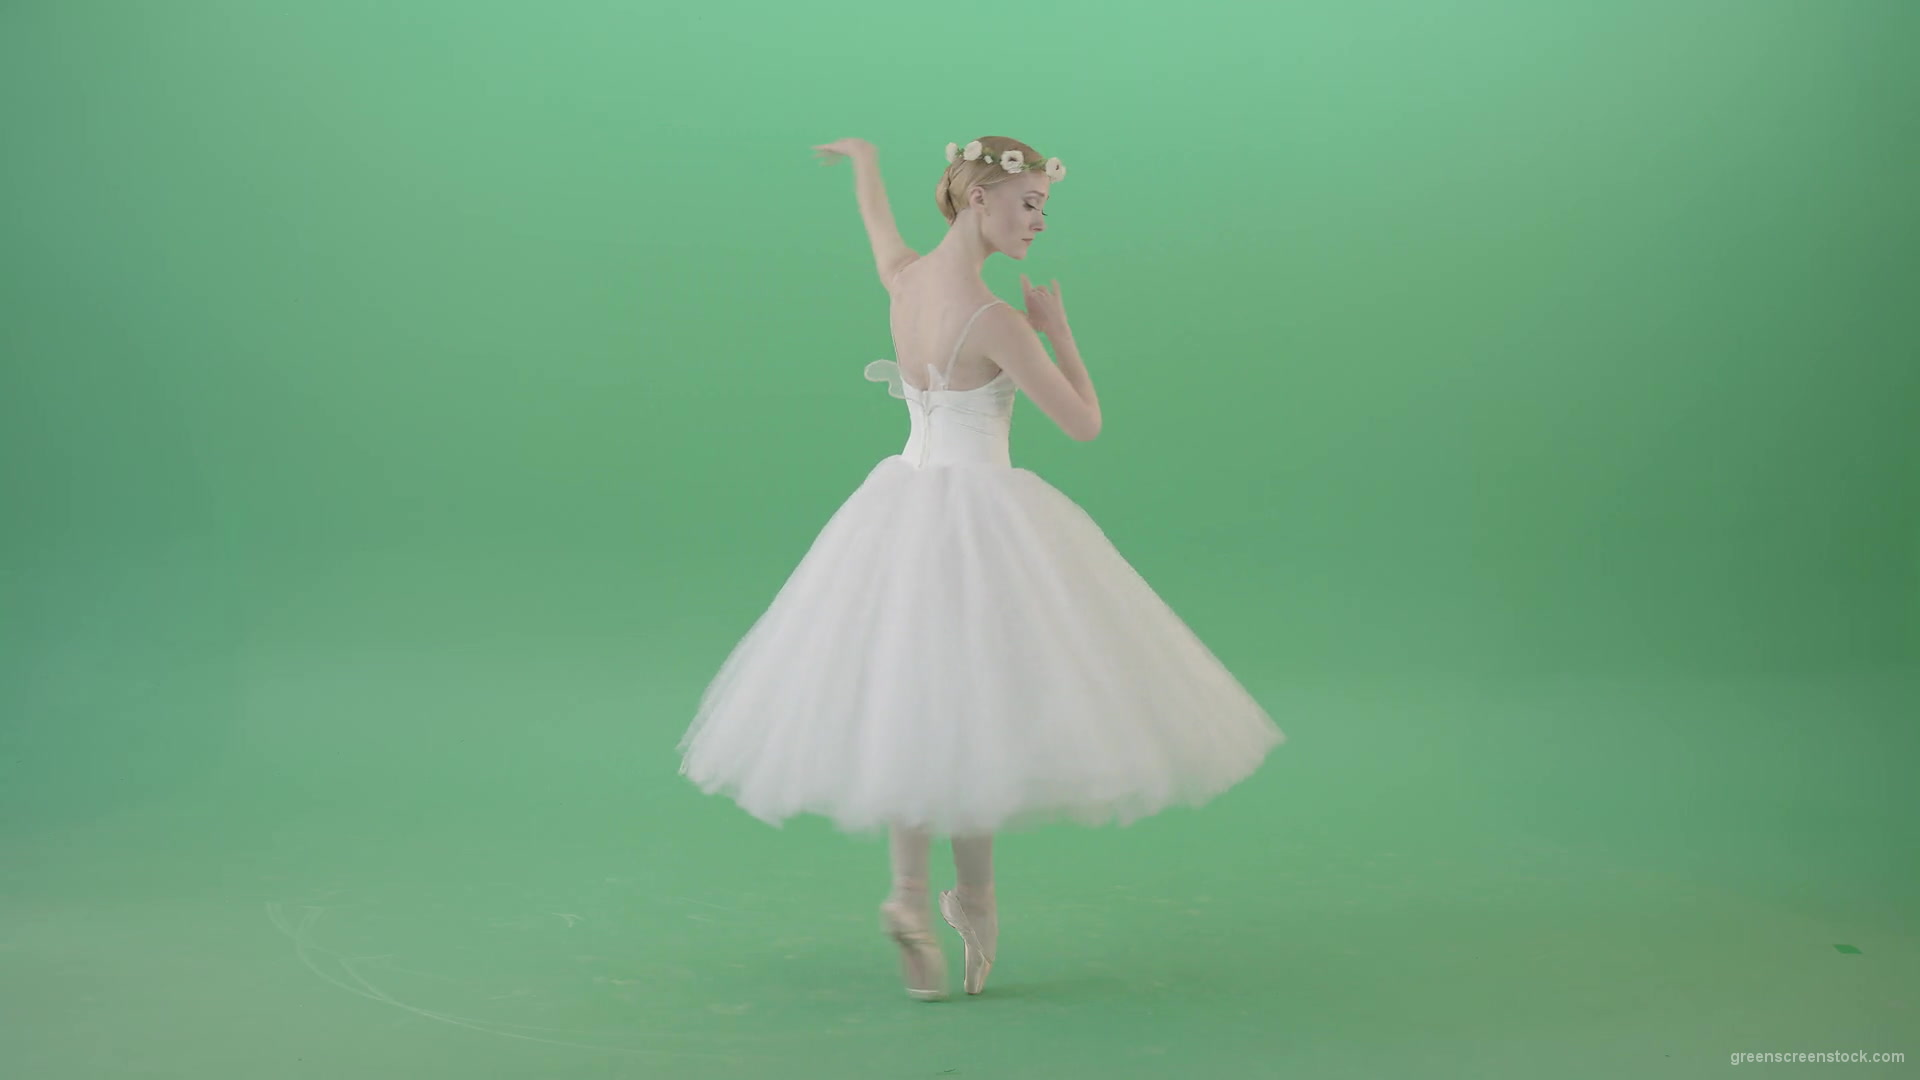 Ballerina-in-elegance-white-wedding-dress-spinning-in-dance-on-green-screen-4K-Video-Footage-1920_007 Green Screen Stock